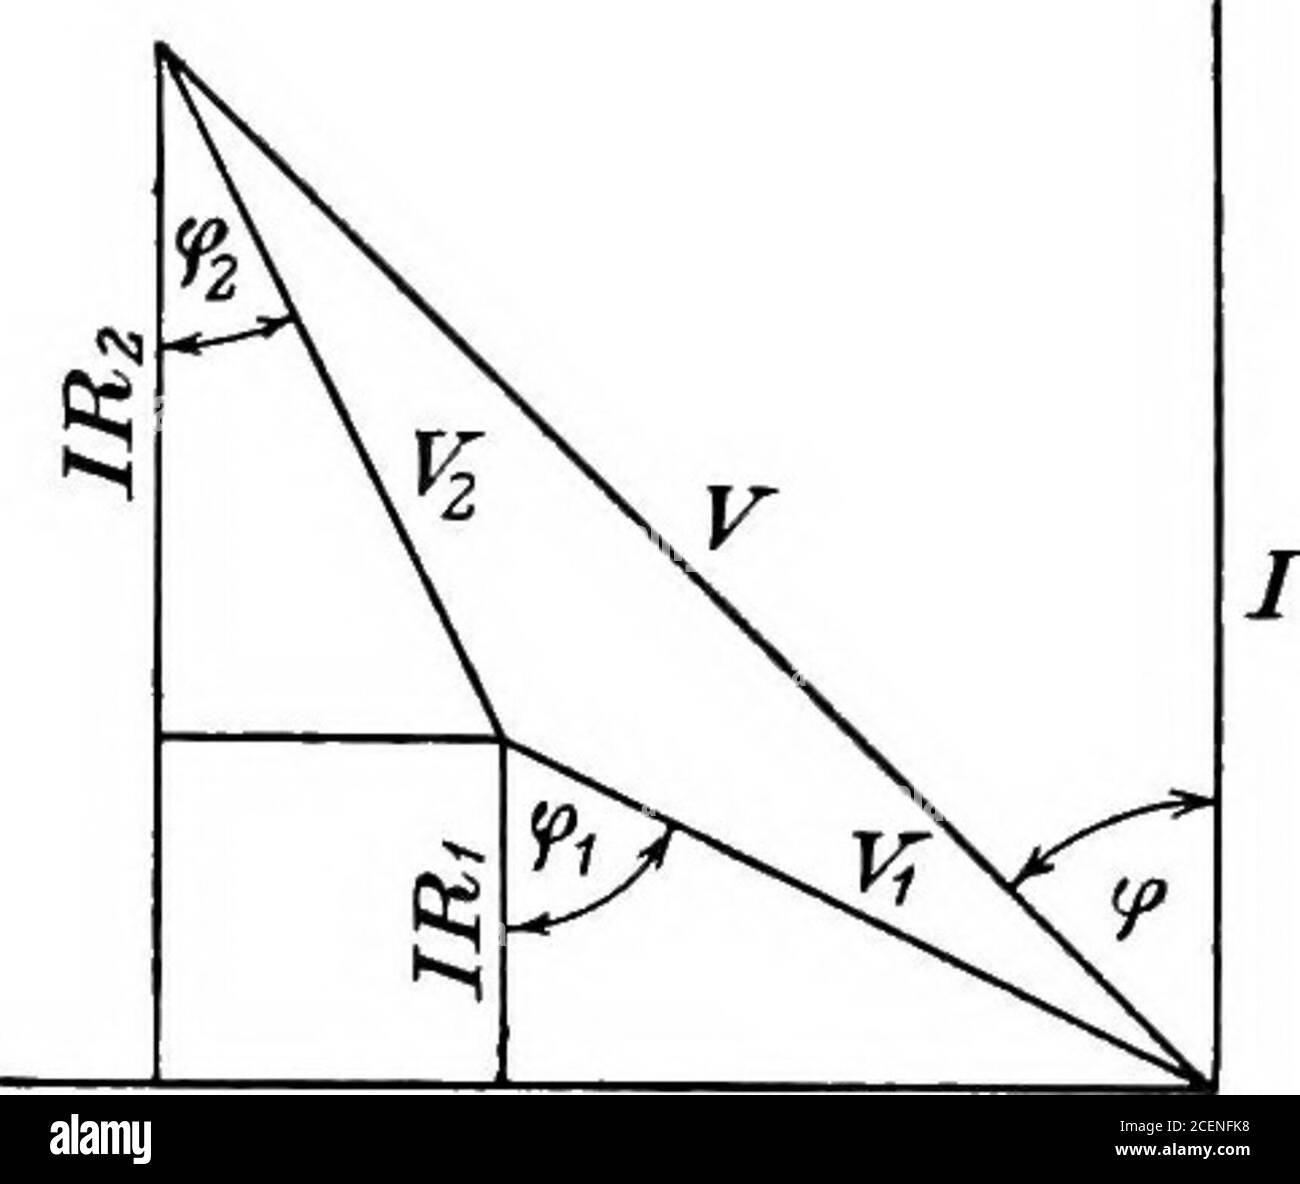 right triangle ternary diagram plotte